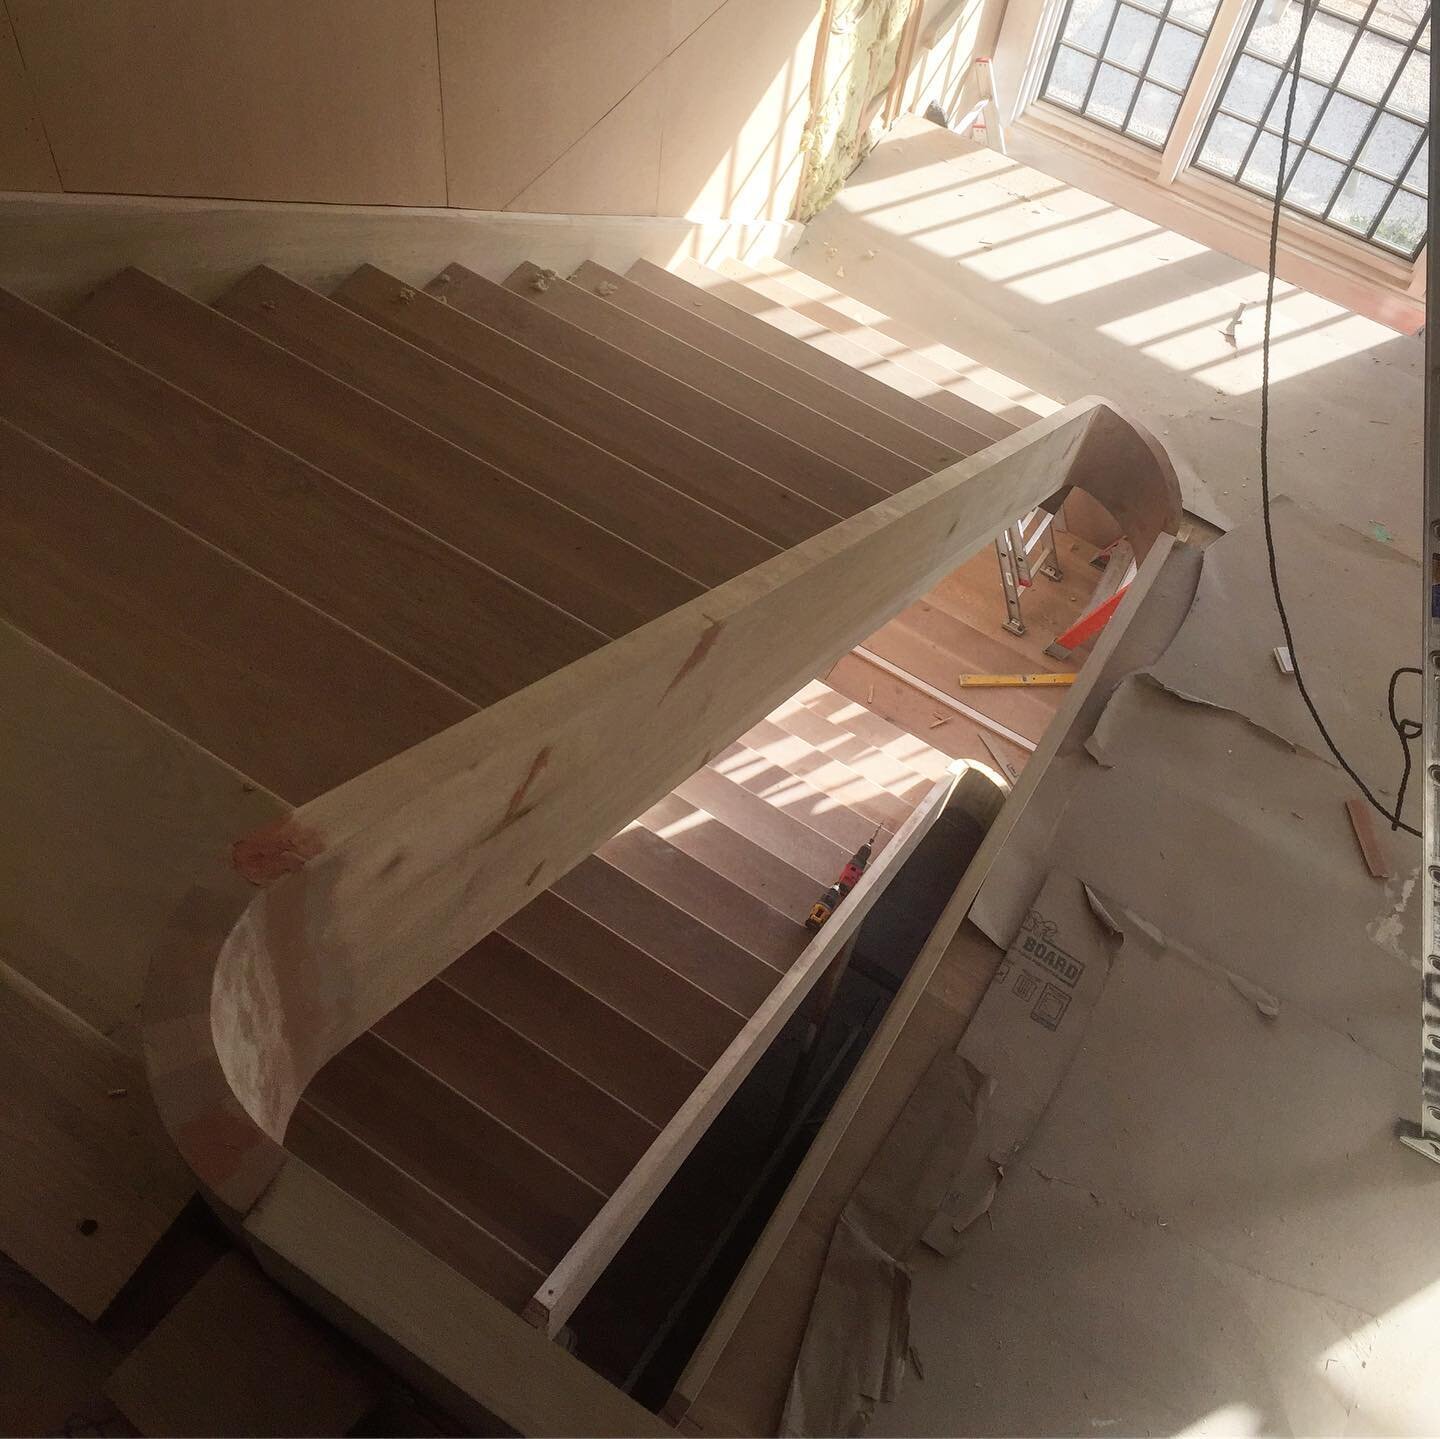 Shaping the staircase @quimbylane 

#quimbylane #builder @houseworks_ny #renovation #houseextension #housemoving #newbasement #bridgehampton #oceanroad #staircase 
#sagharbor #easthampton #amagansett #coastalliving